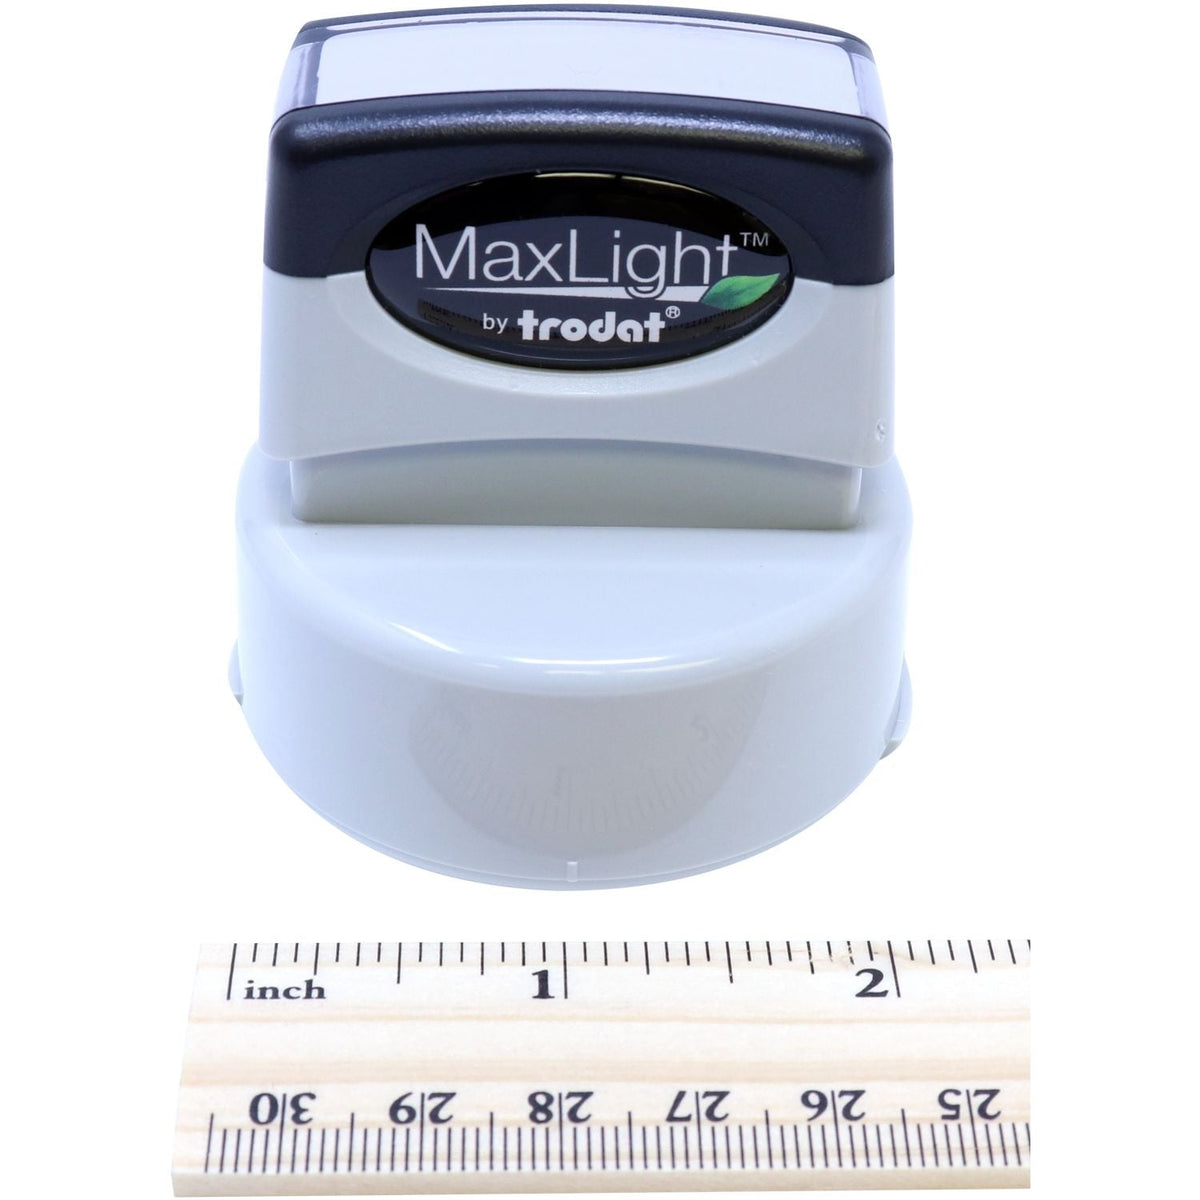 Maxlight Custom Stamp Xl2 535 Front Ruler